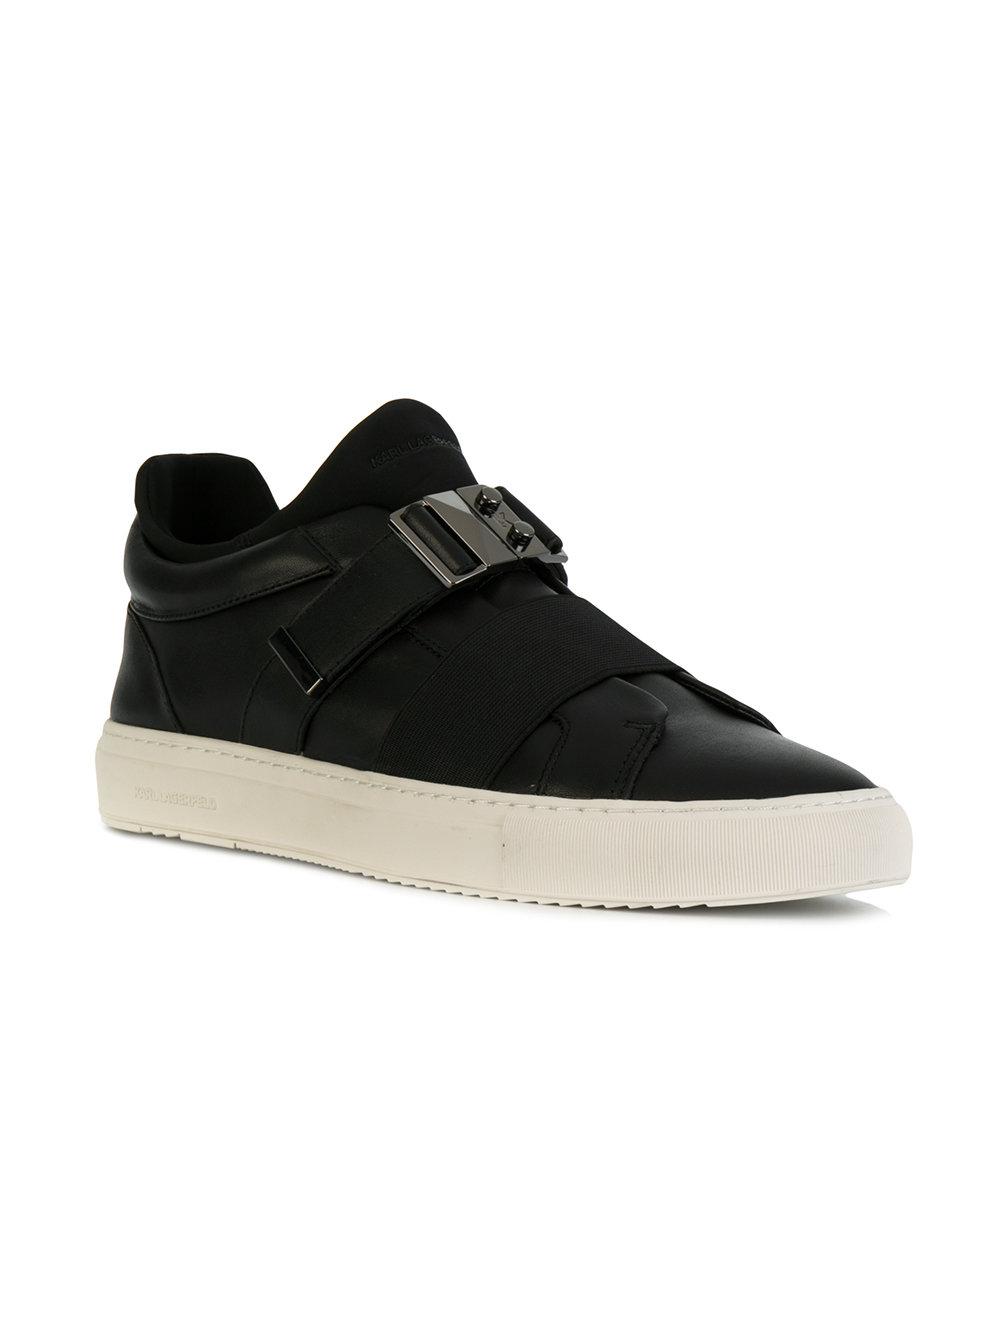 Lyst - Karl lagerfeld Strappy Slip-on Sneakers in Black for Men